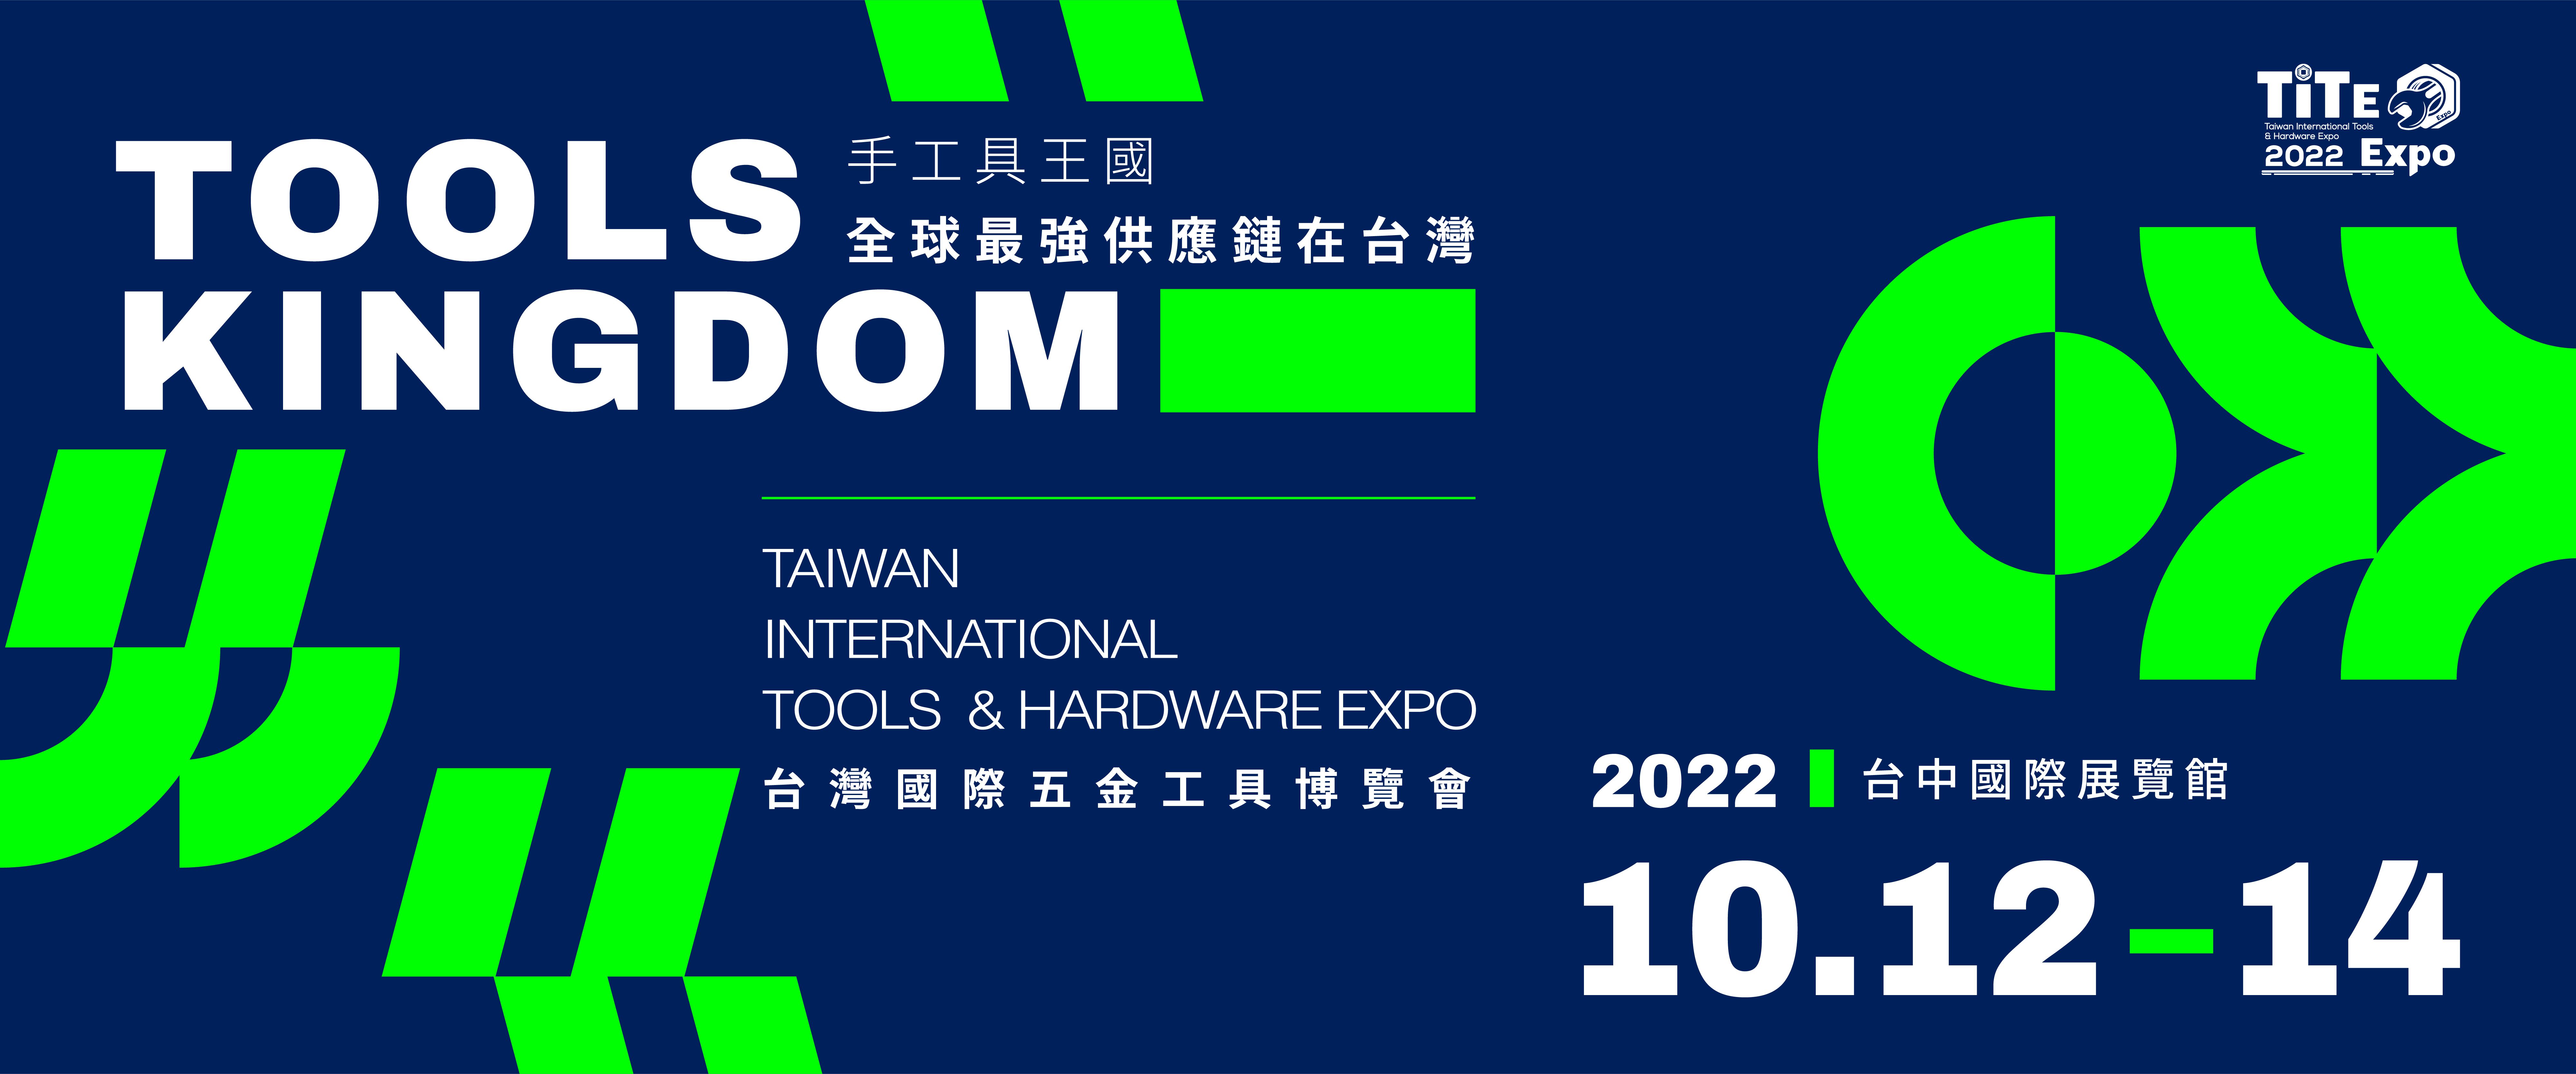 TAIWAN INTERNATIONAL TOOLS & HARDWARE EXPO 2022